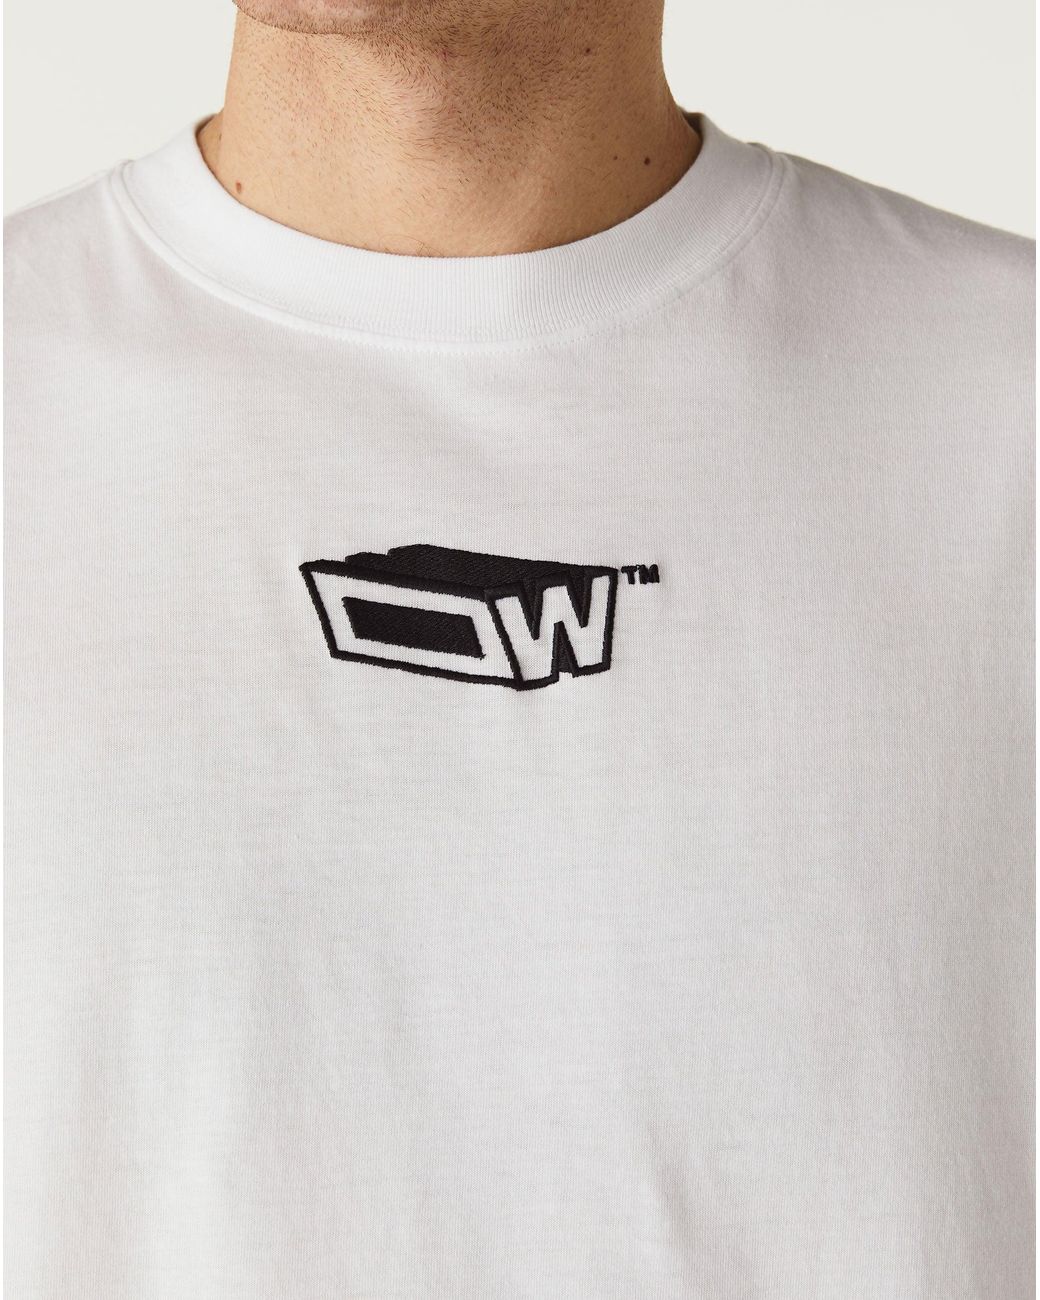 Buy Off-White™ Neen Graffiti Skate T-shirt - White At 49% Off